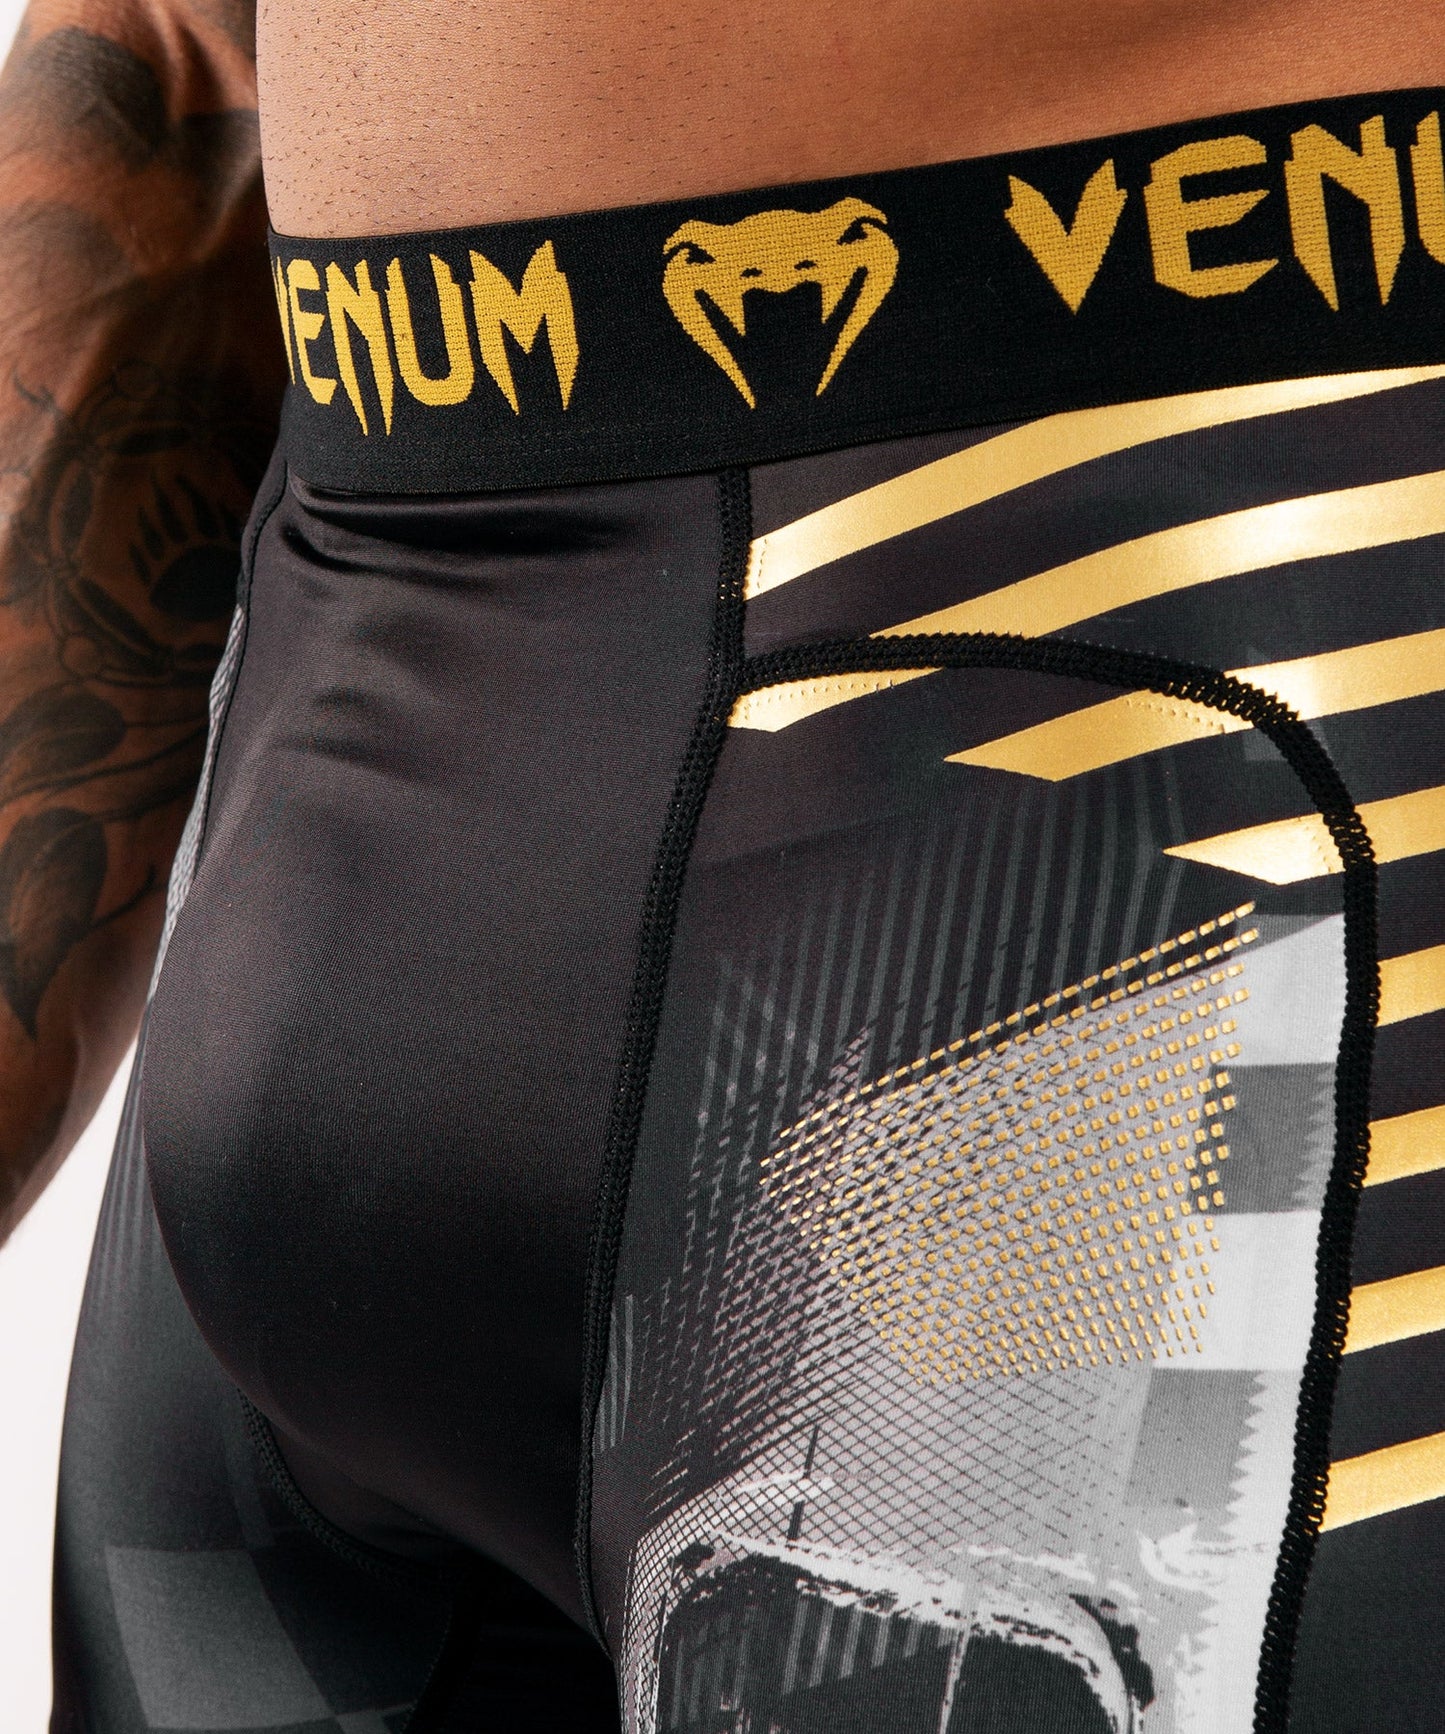 Venum Skull compression shorts - Black